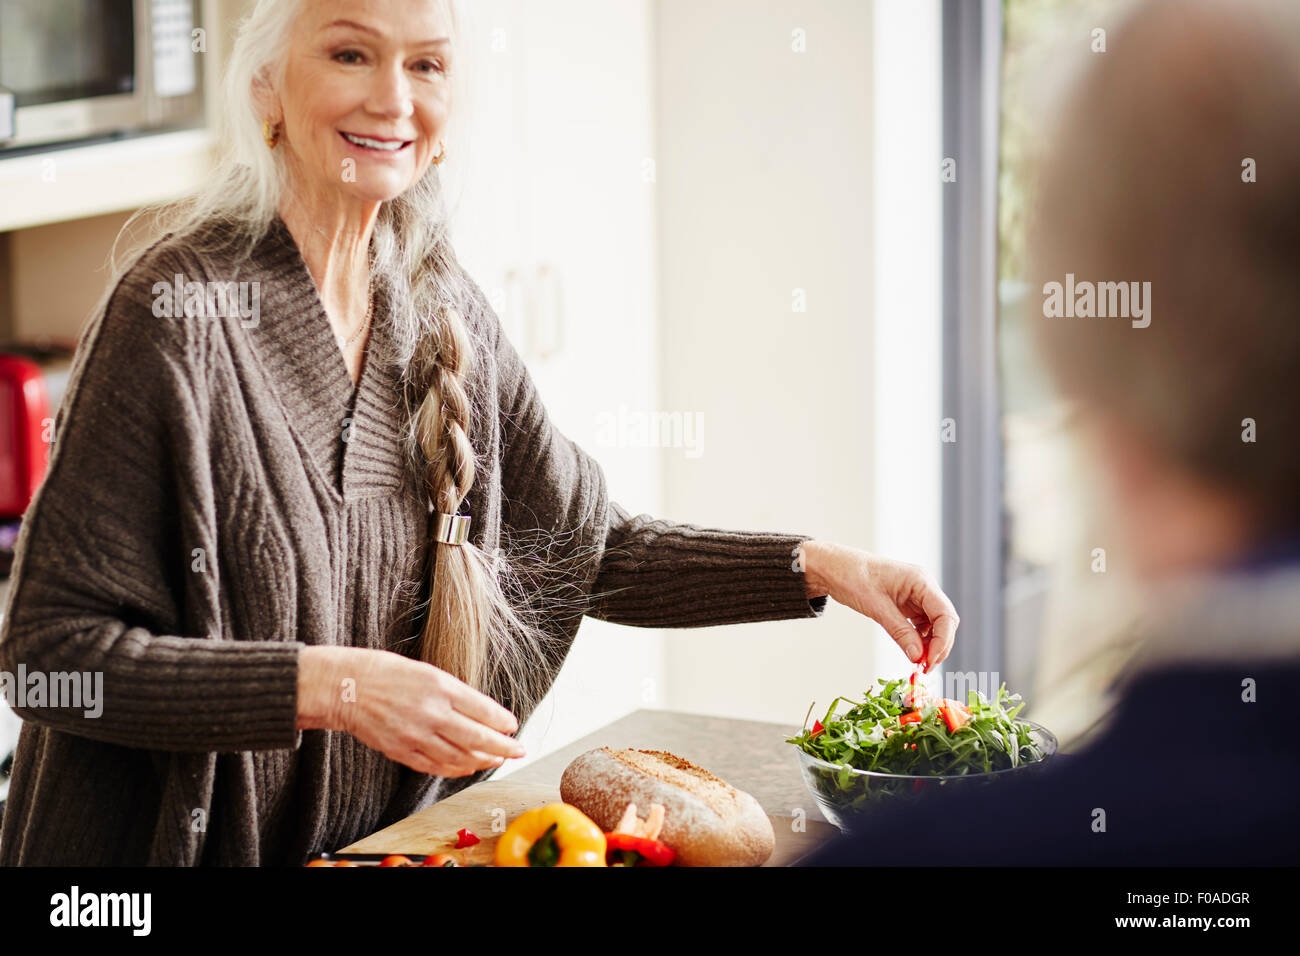 Senior woman preparing food in kitchen Banque D'Images